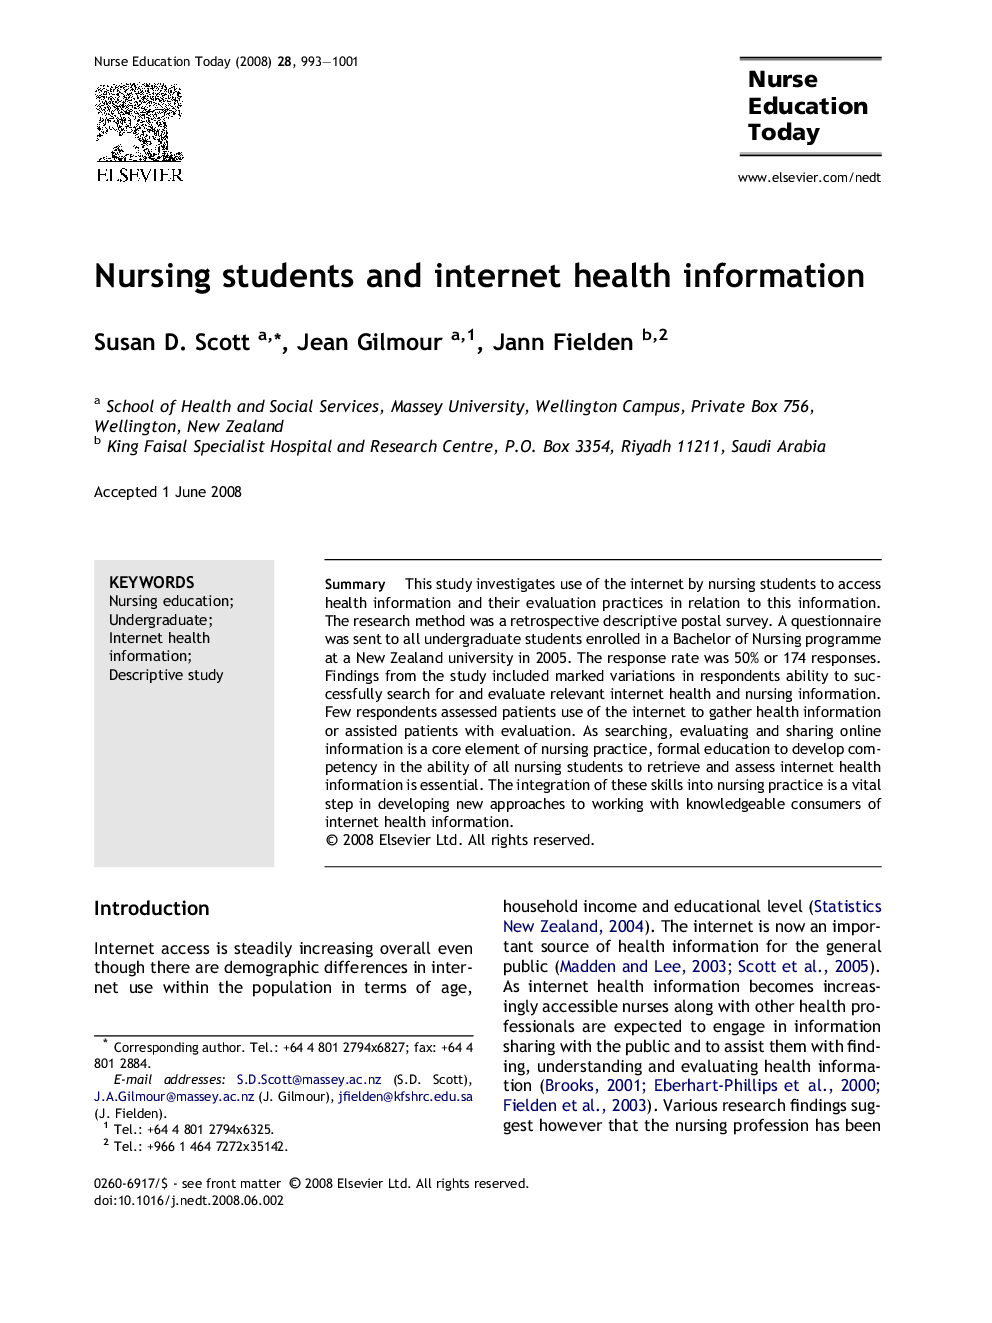 Nursing students and internet health information